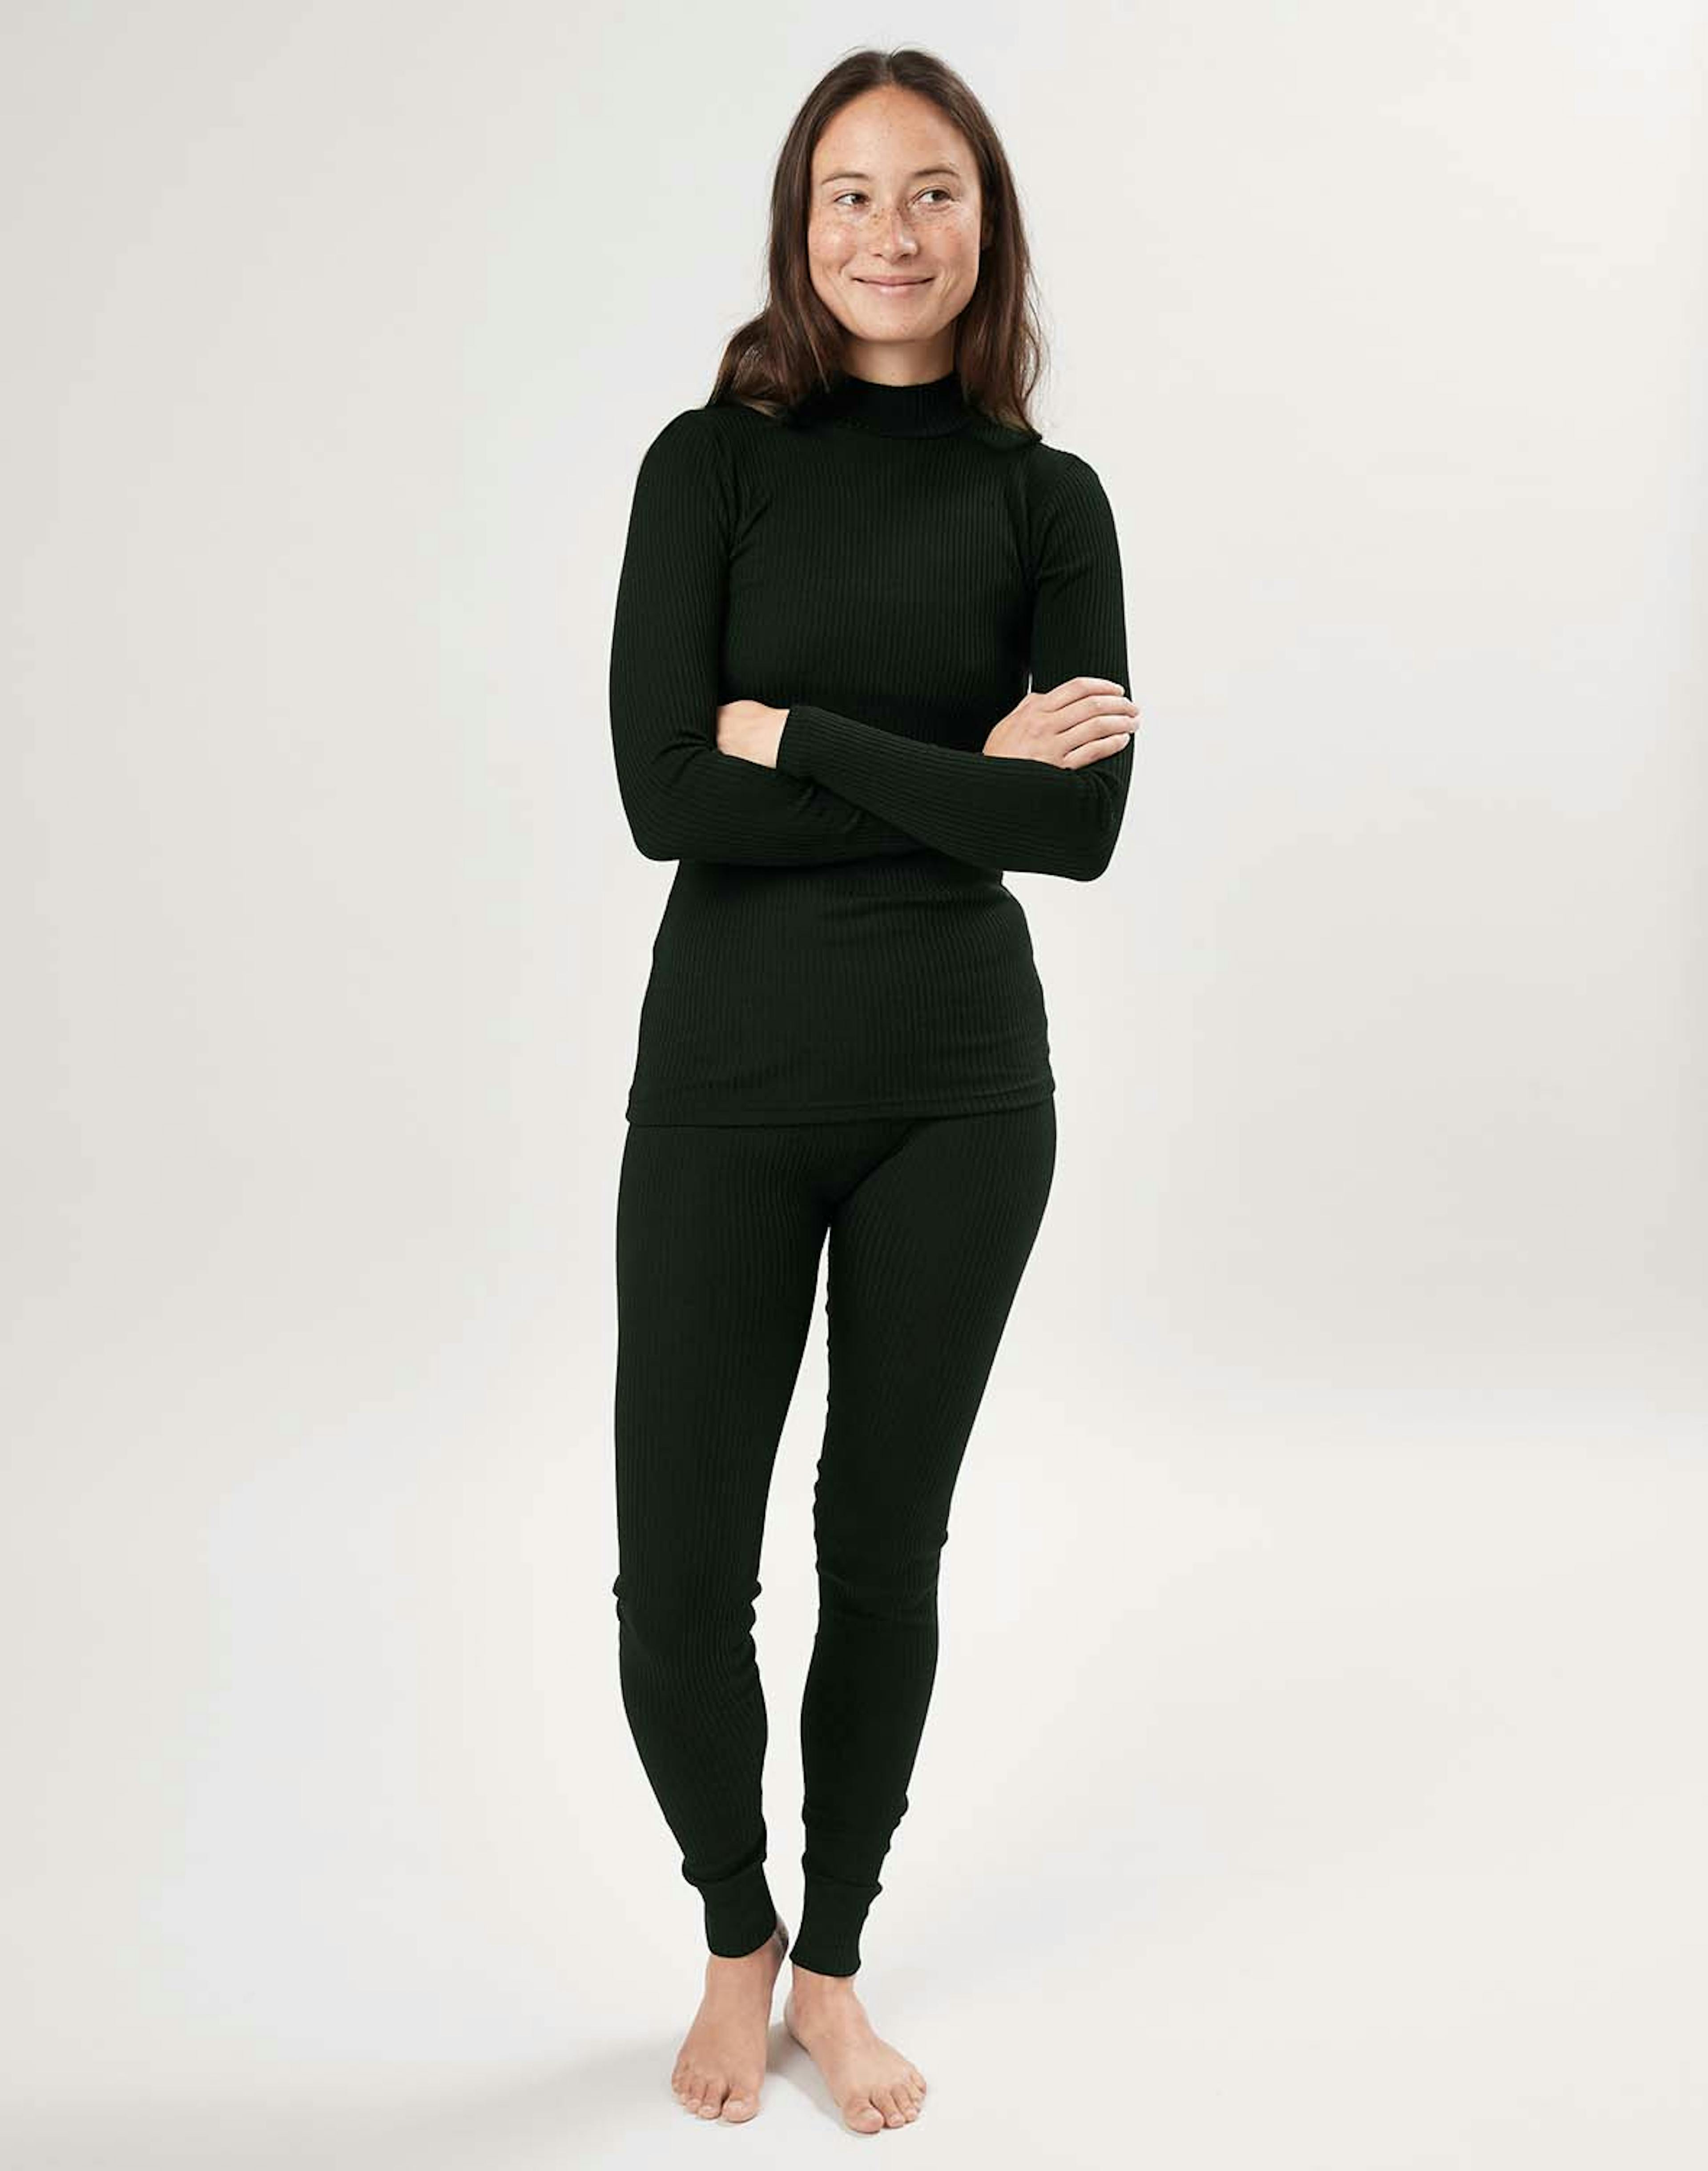 Women's merino wool leggings - Greenish black - Dilling